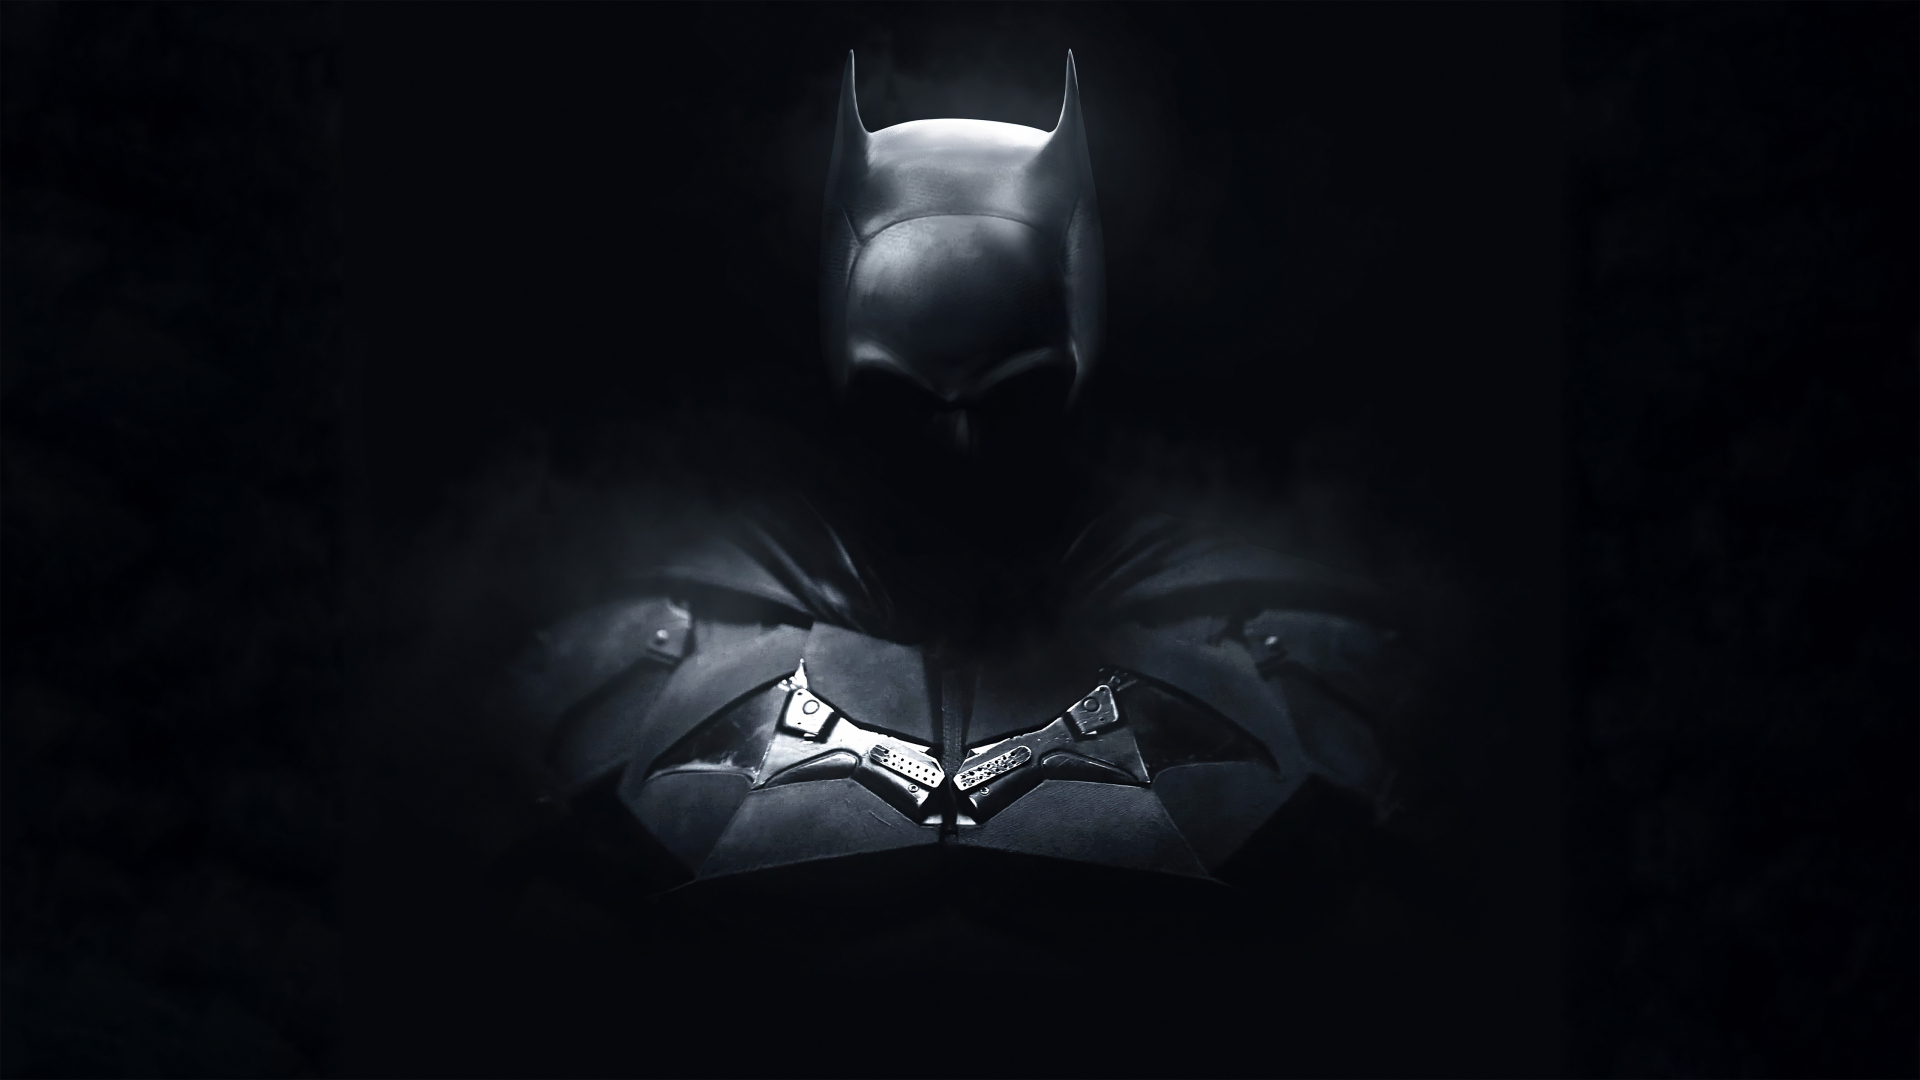 download batman vr pc for free